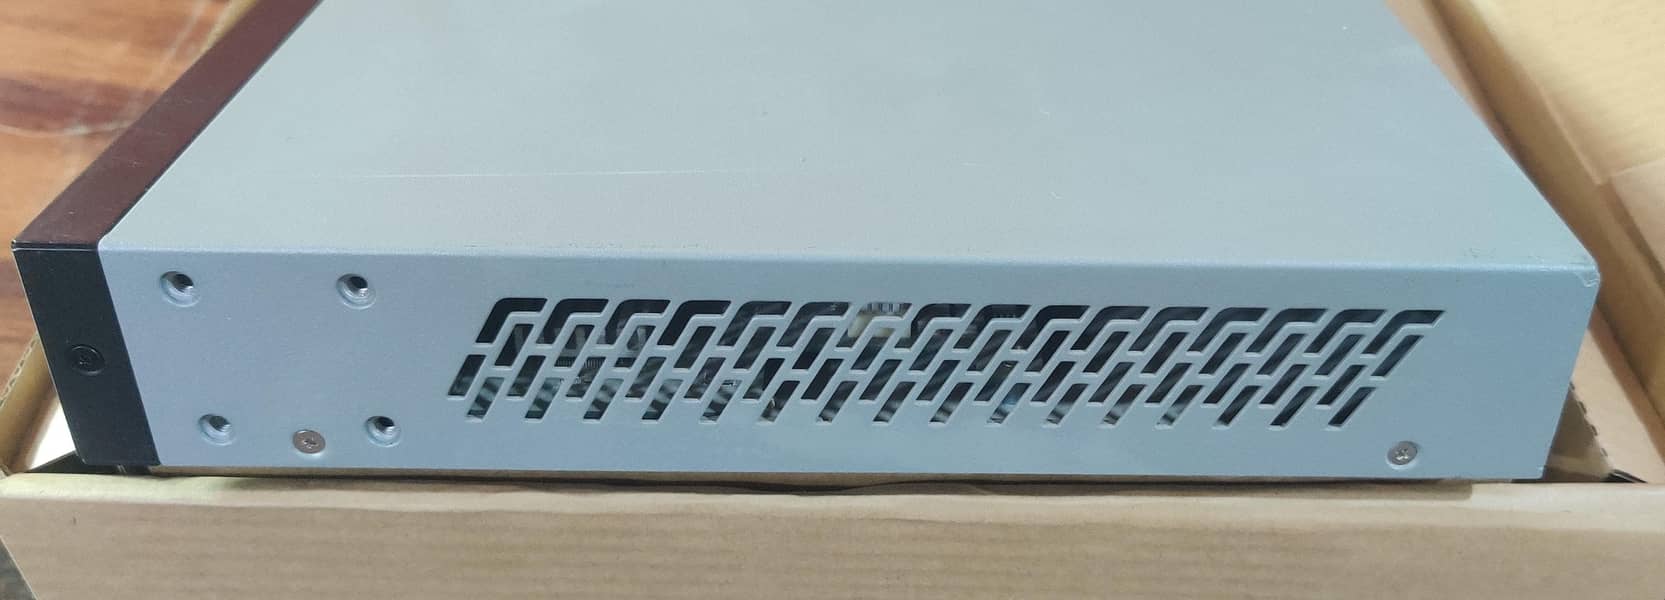 Cisco SF-300- 24P 24-port 10/100 PoE Managed Gigabit Switch (Open Box) 15